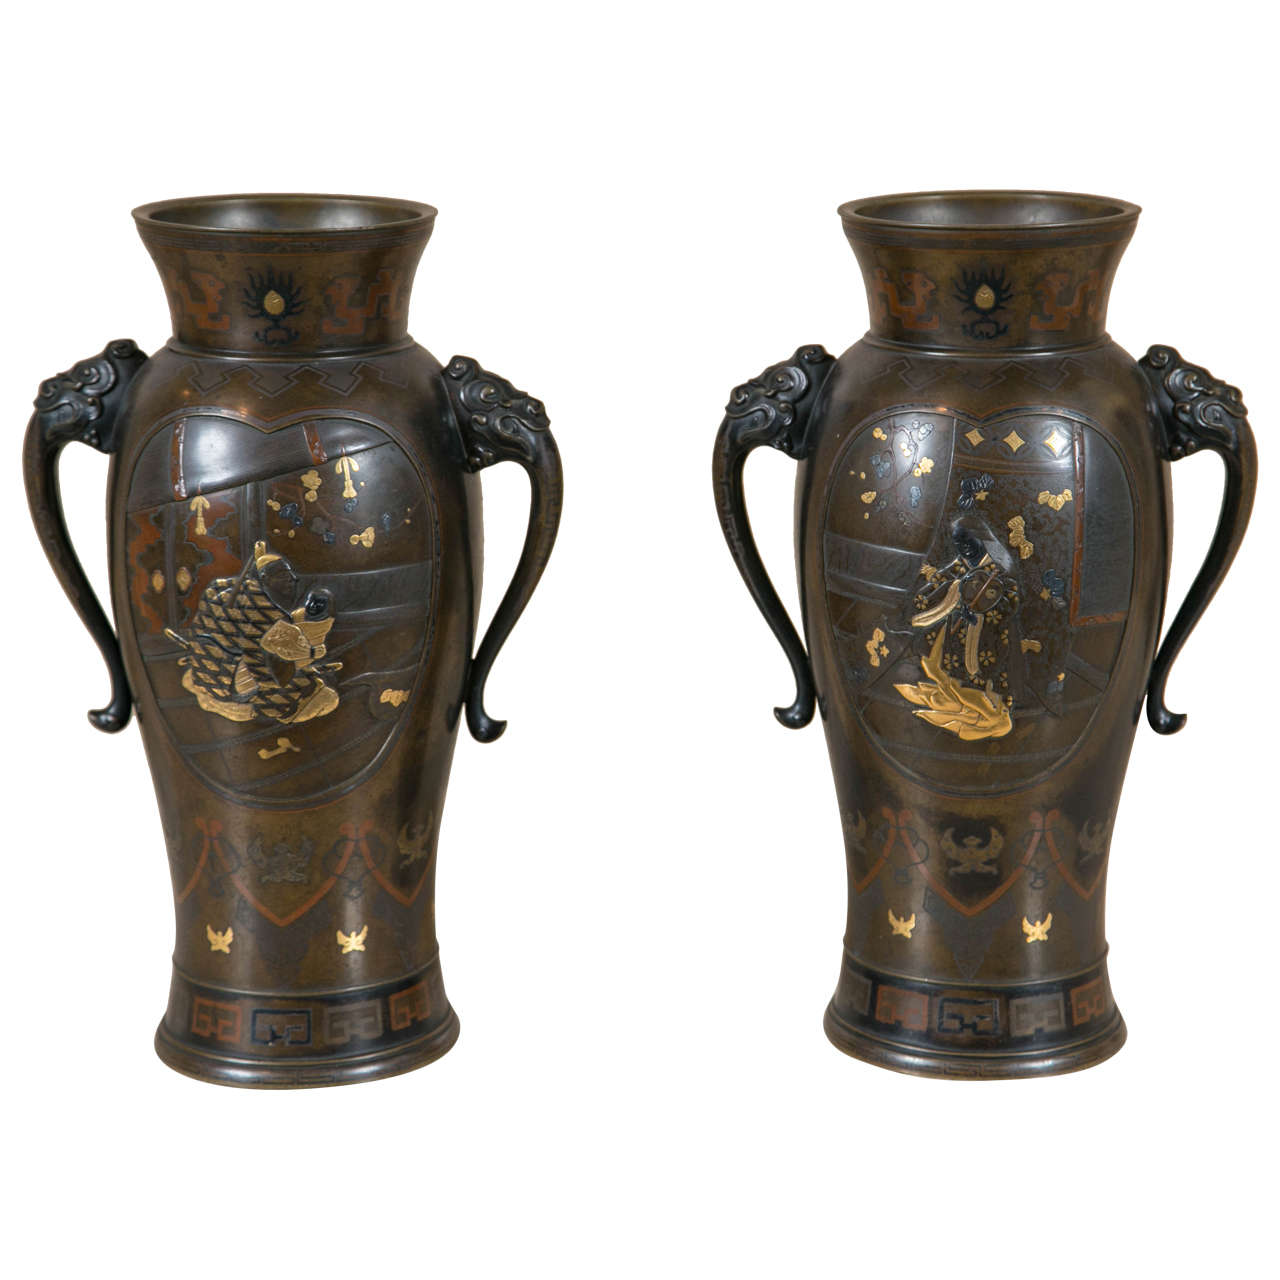 Pair of 19th Century Japanese Meiji Period Bronze Vases